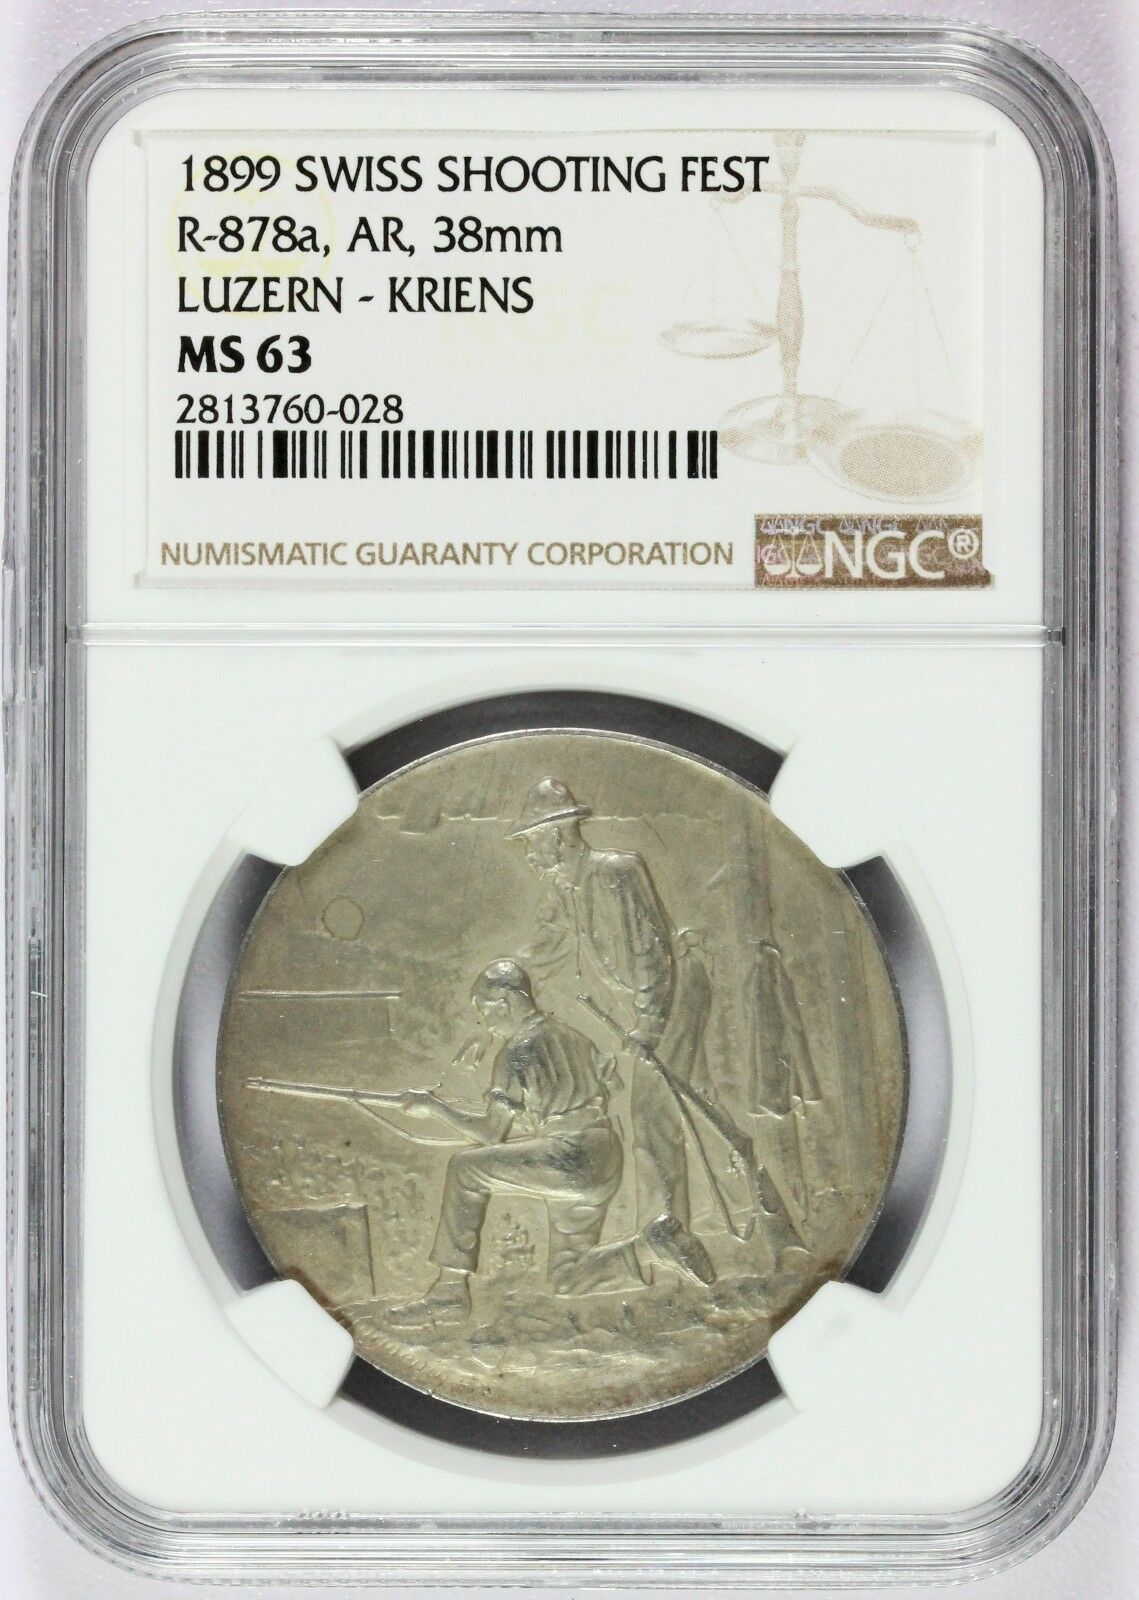 1899 Switzerland Luzern-kriens Swiss Shooting Fest Silver Medal R-878a Ngc Ms 63